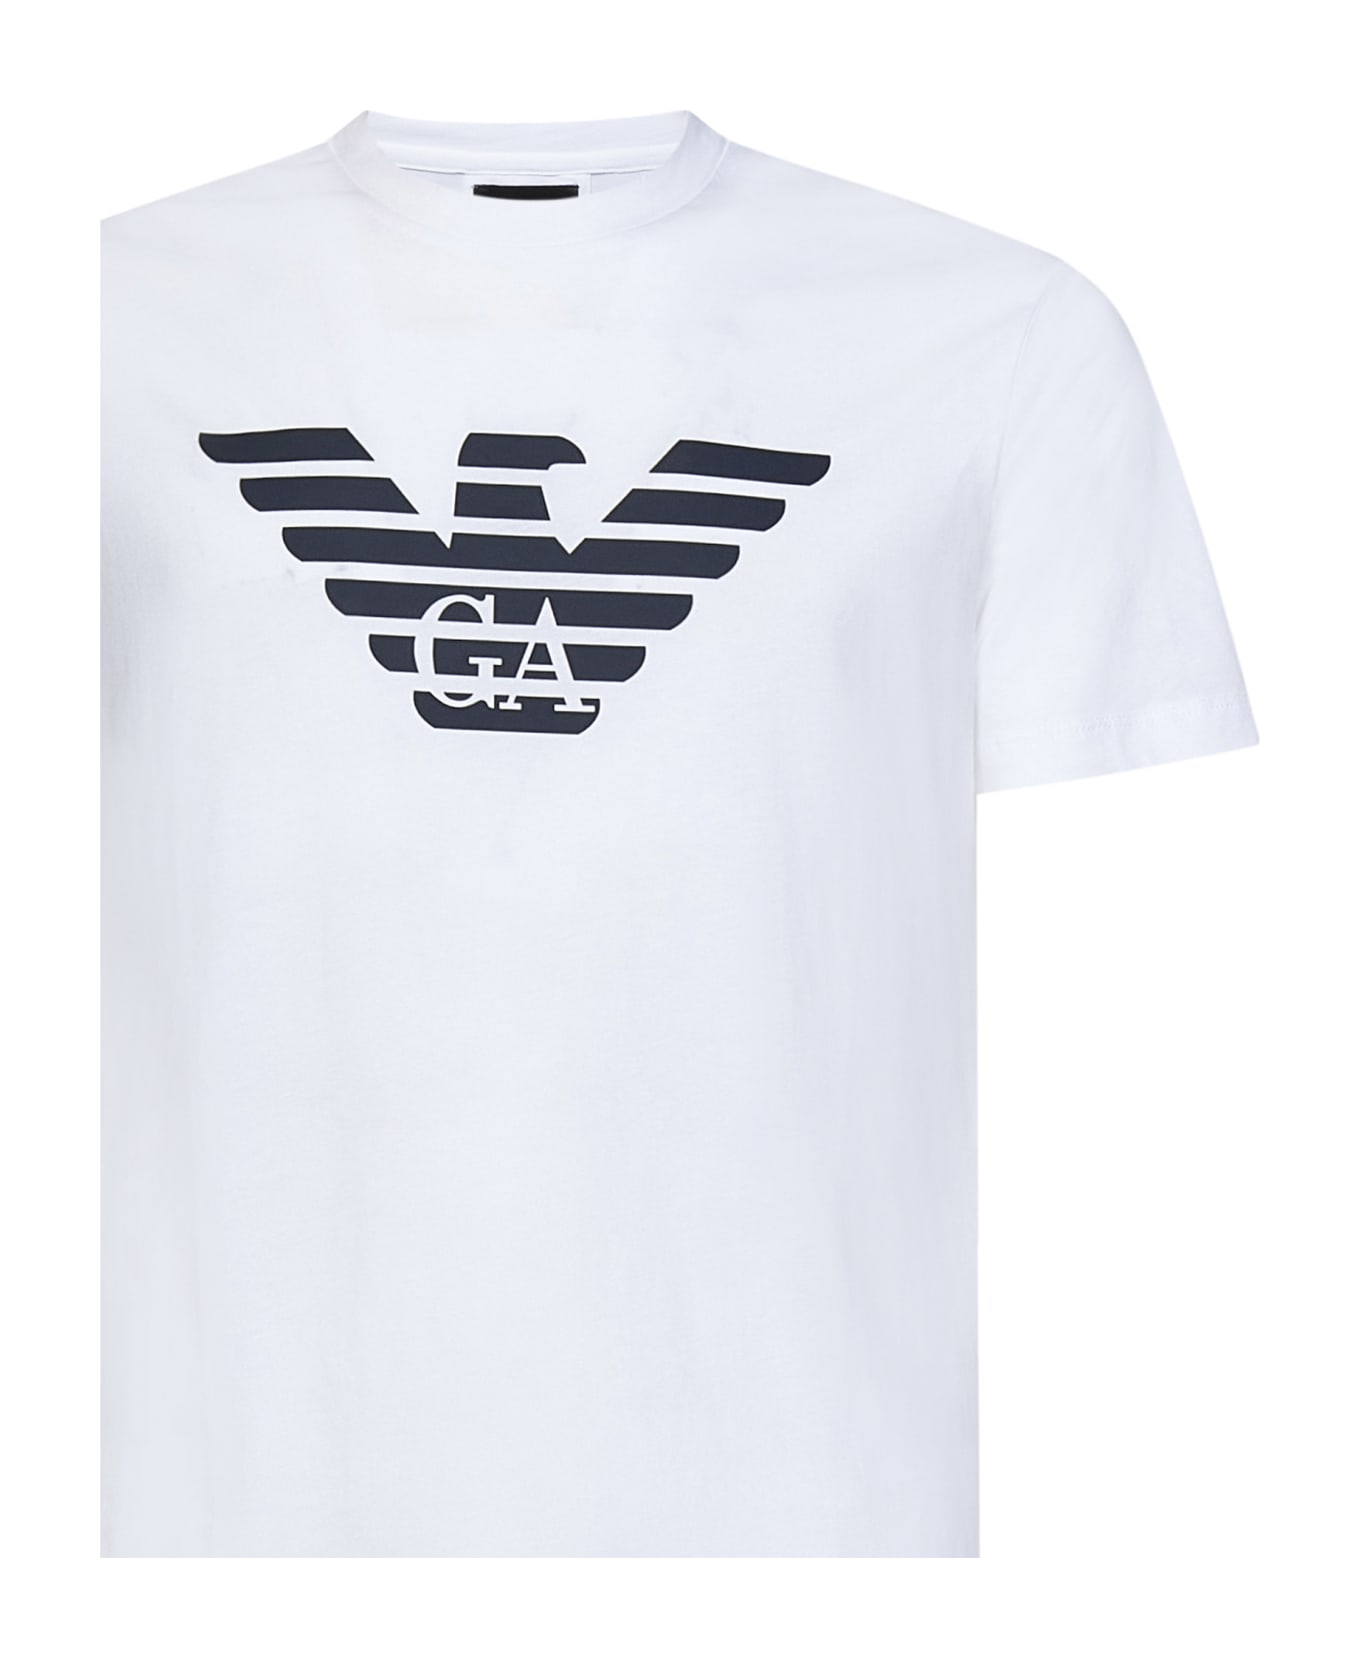 Emporio Armani T-shirt - Bianco ottico aquila